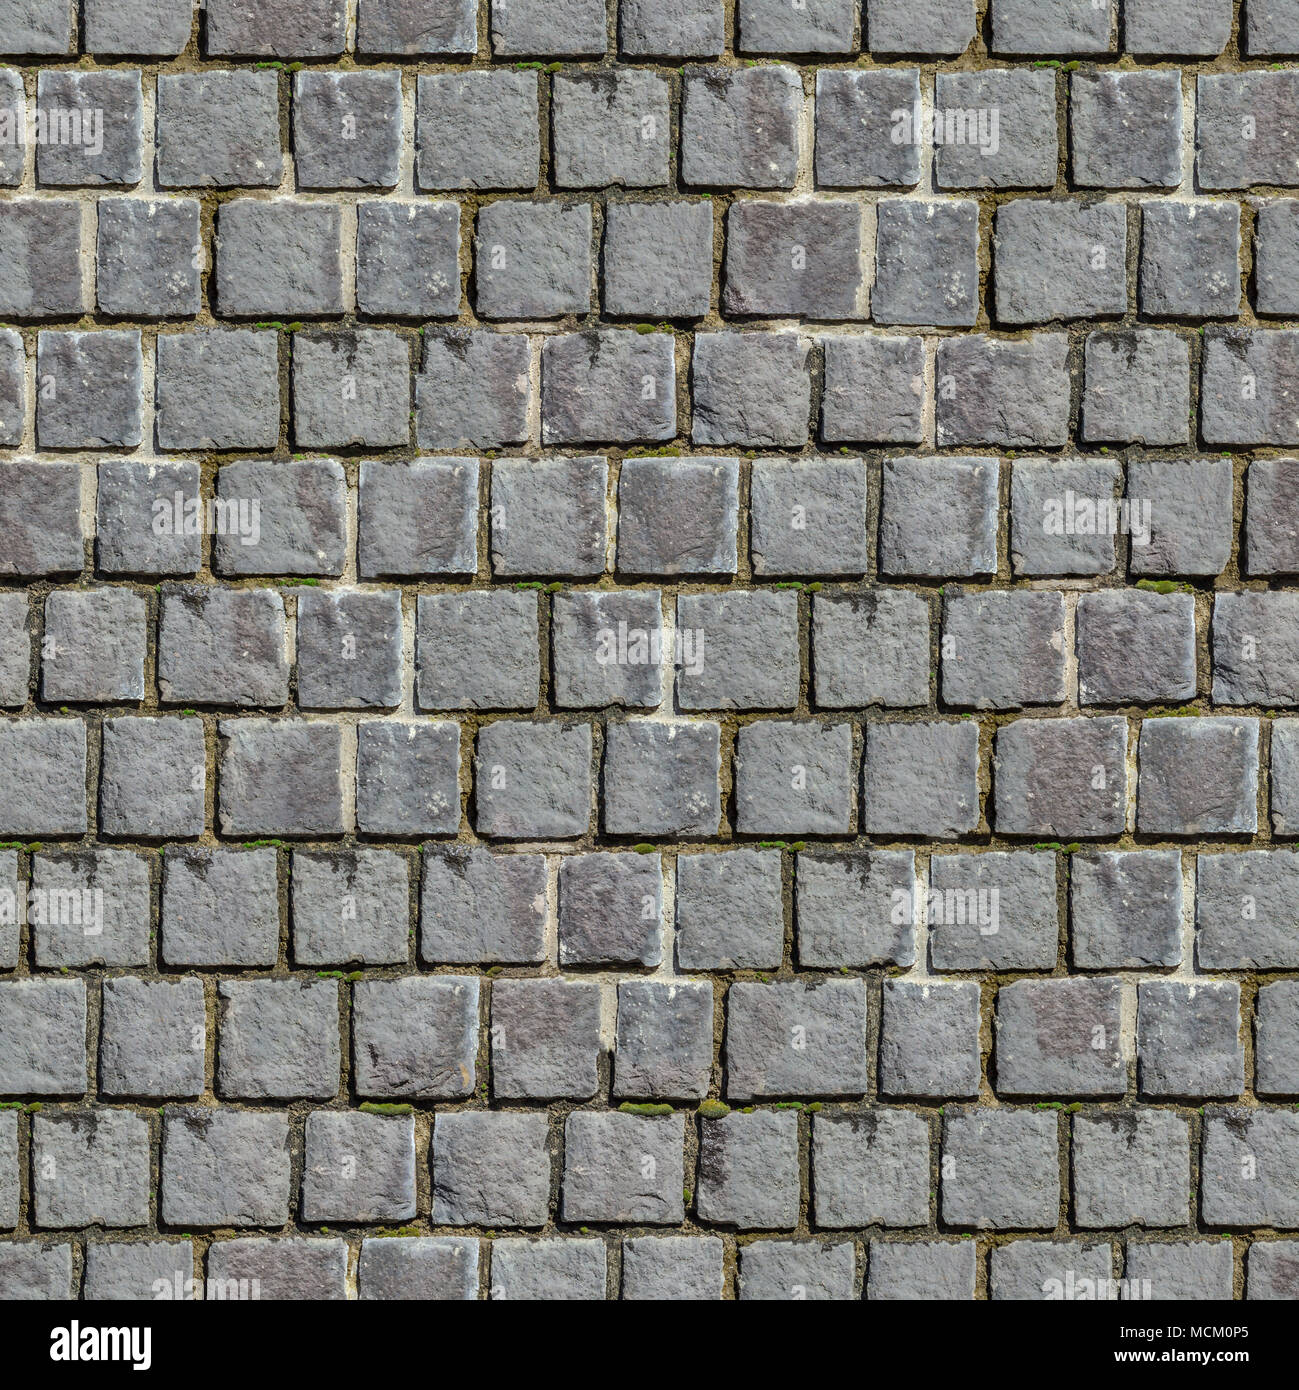 Stone Block Seamless Tileable Texture. Stock Photo